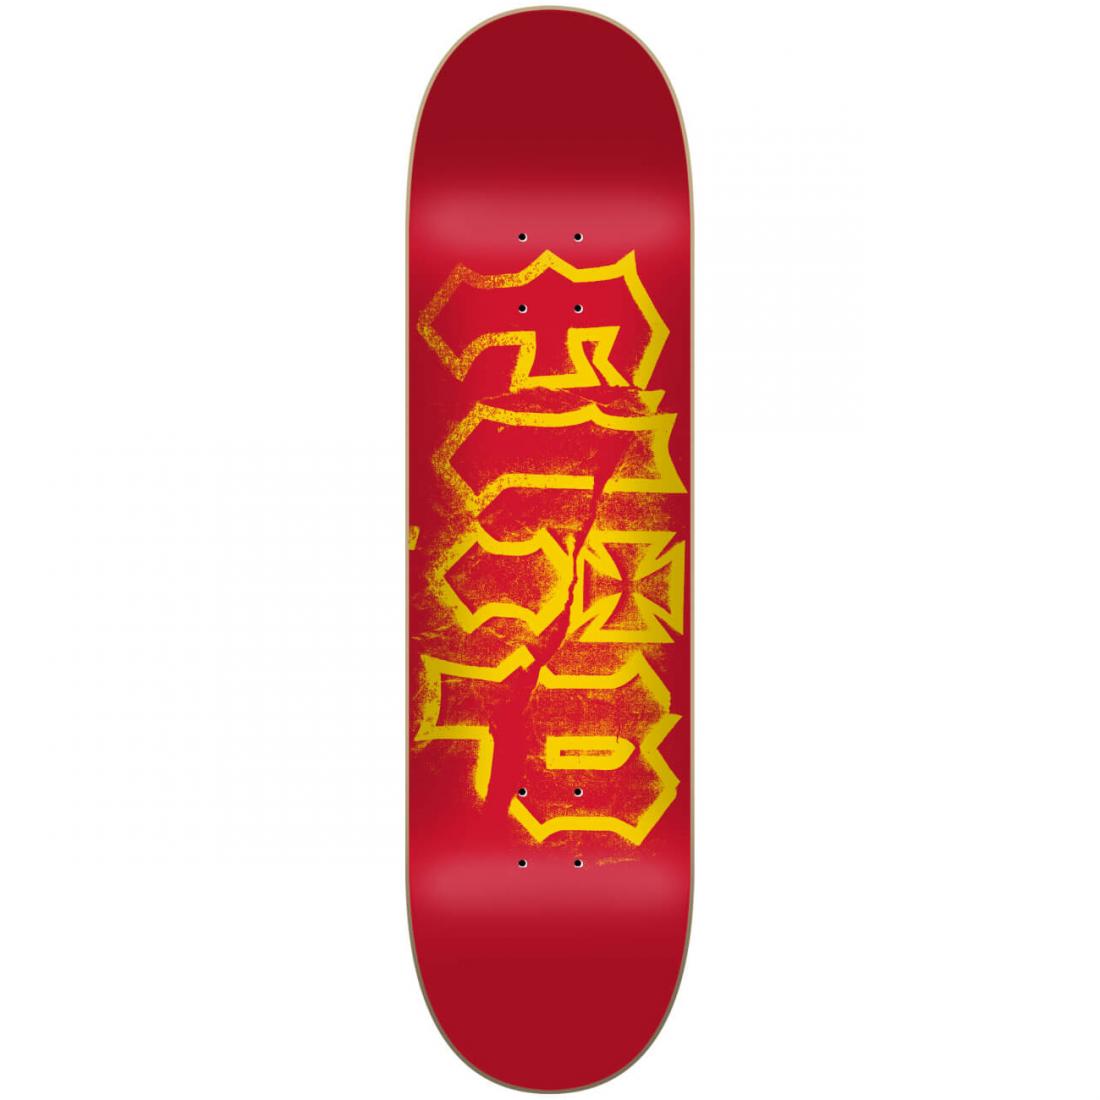 Дека скейтборд Flip Hkd Torn Deck Flip, цвет красный, размер 8.0